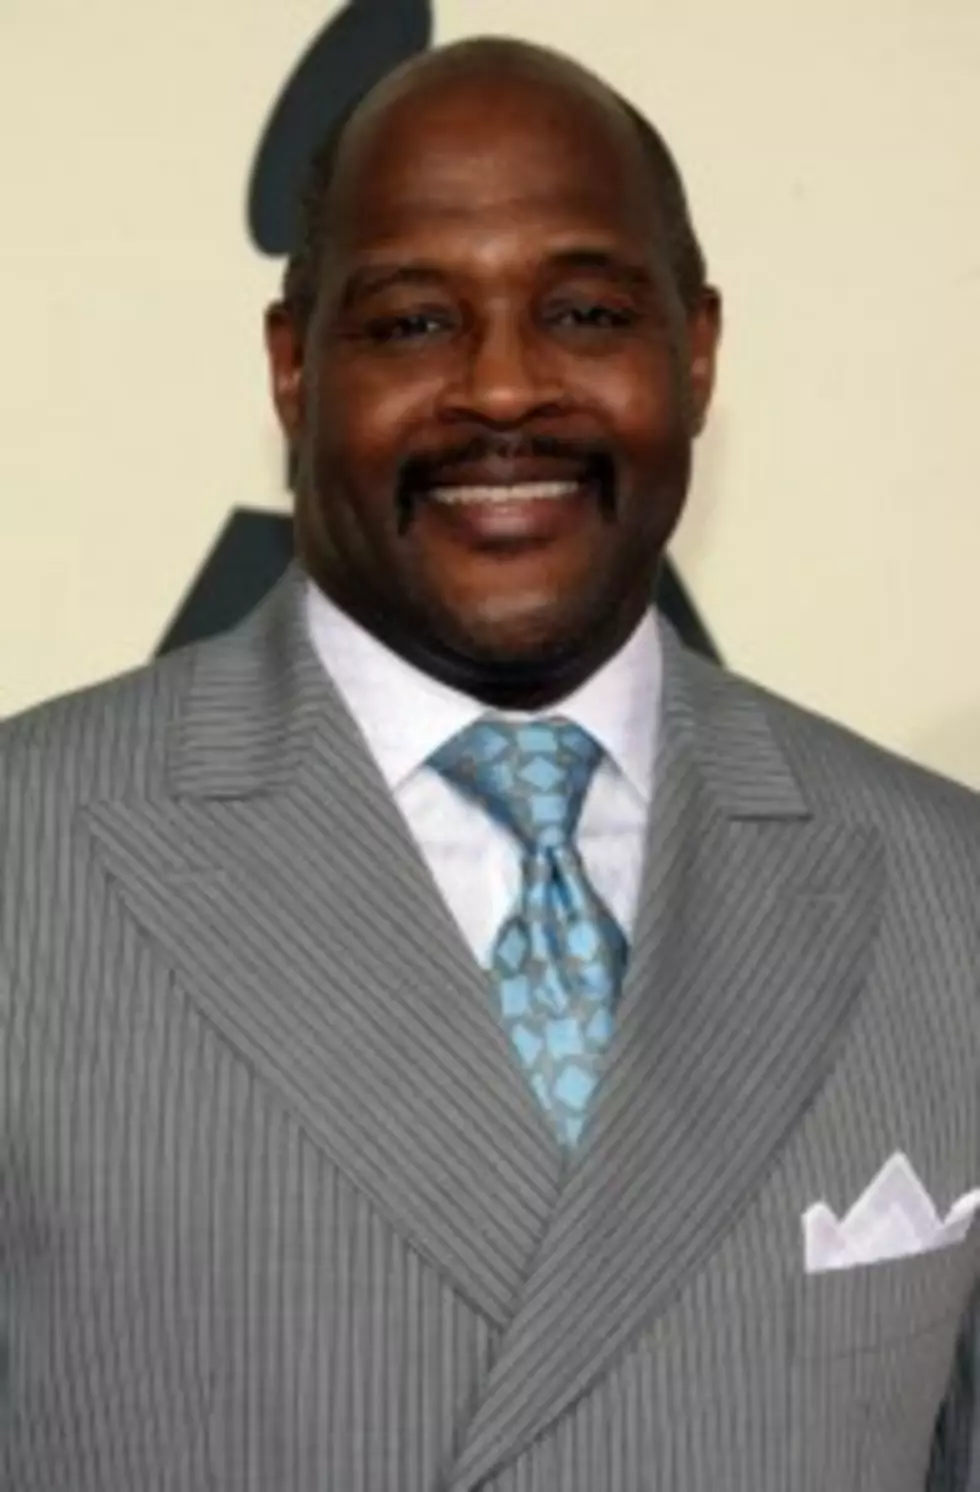 Pastor Marvin Winans Beaten And Carjacked In Detroit